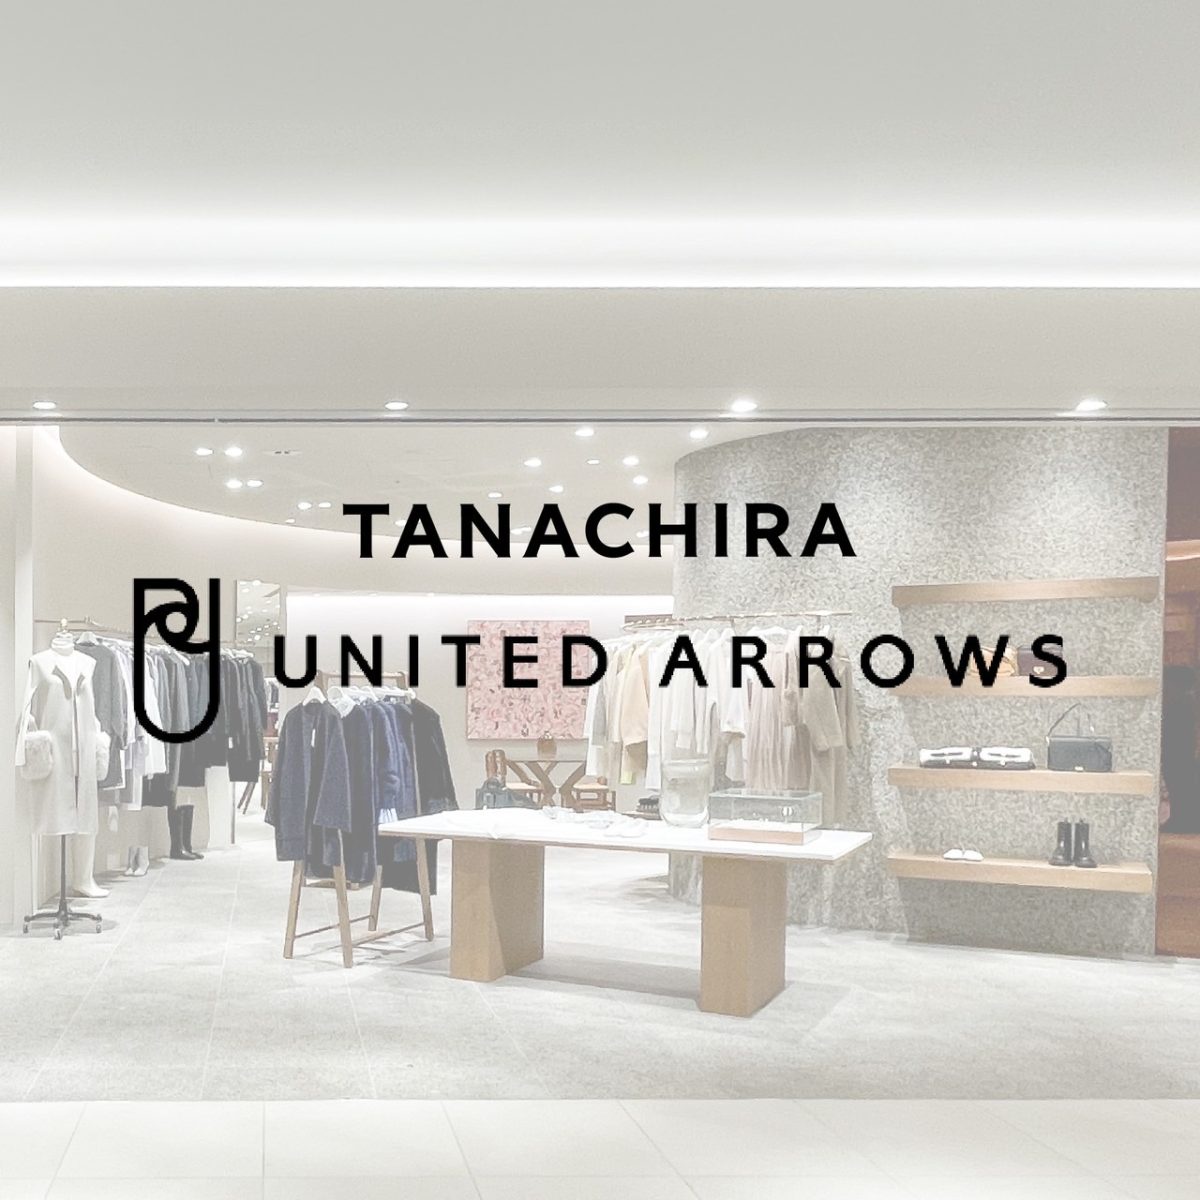 TAN เปิดตัว 'UNITED ARROWS' แบรนด์บิ๊กเนมสัญชาติญี่ปุ่น เสริมแกร่งพอร์ตแฟชั่น เจาะกลุ่มคนรุ่นใหม่กำลังซื้อสูง ปักธงปี 67 ดันรายได้โตเพิ่ม 20%